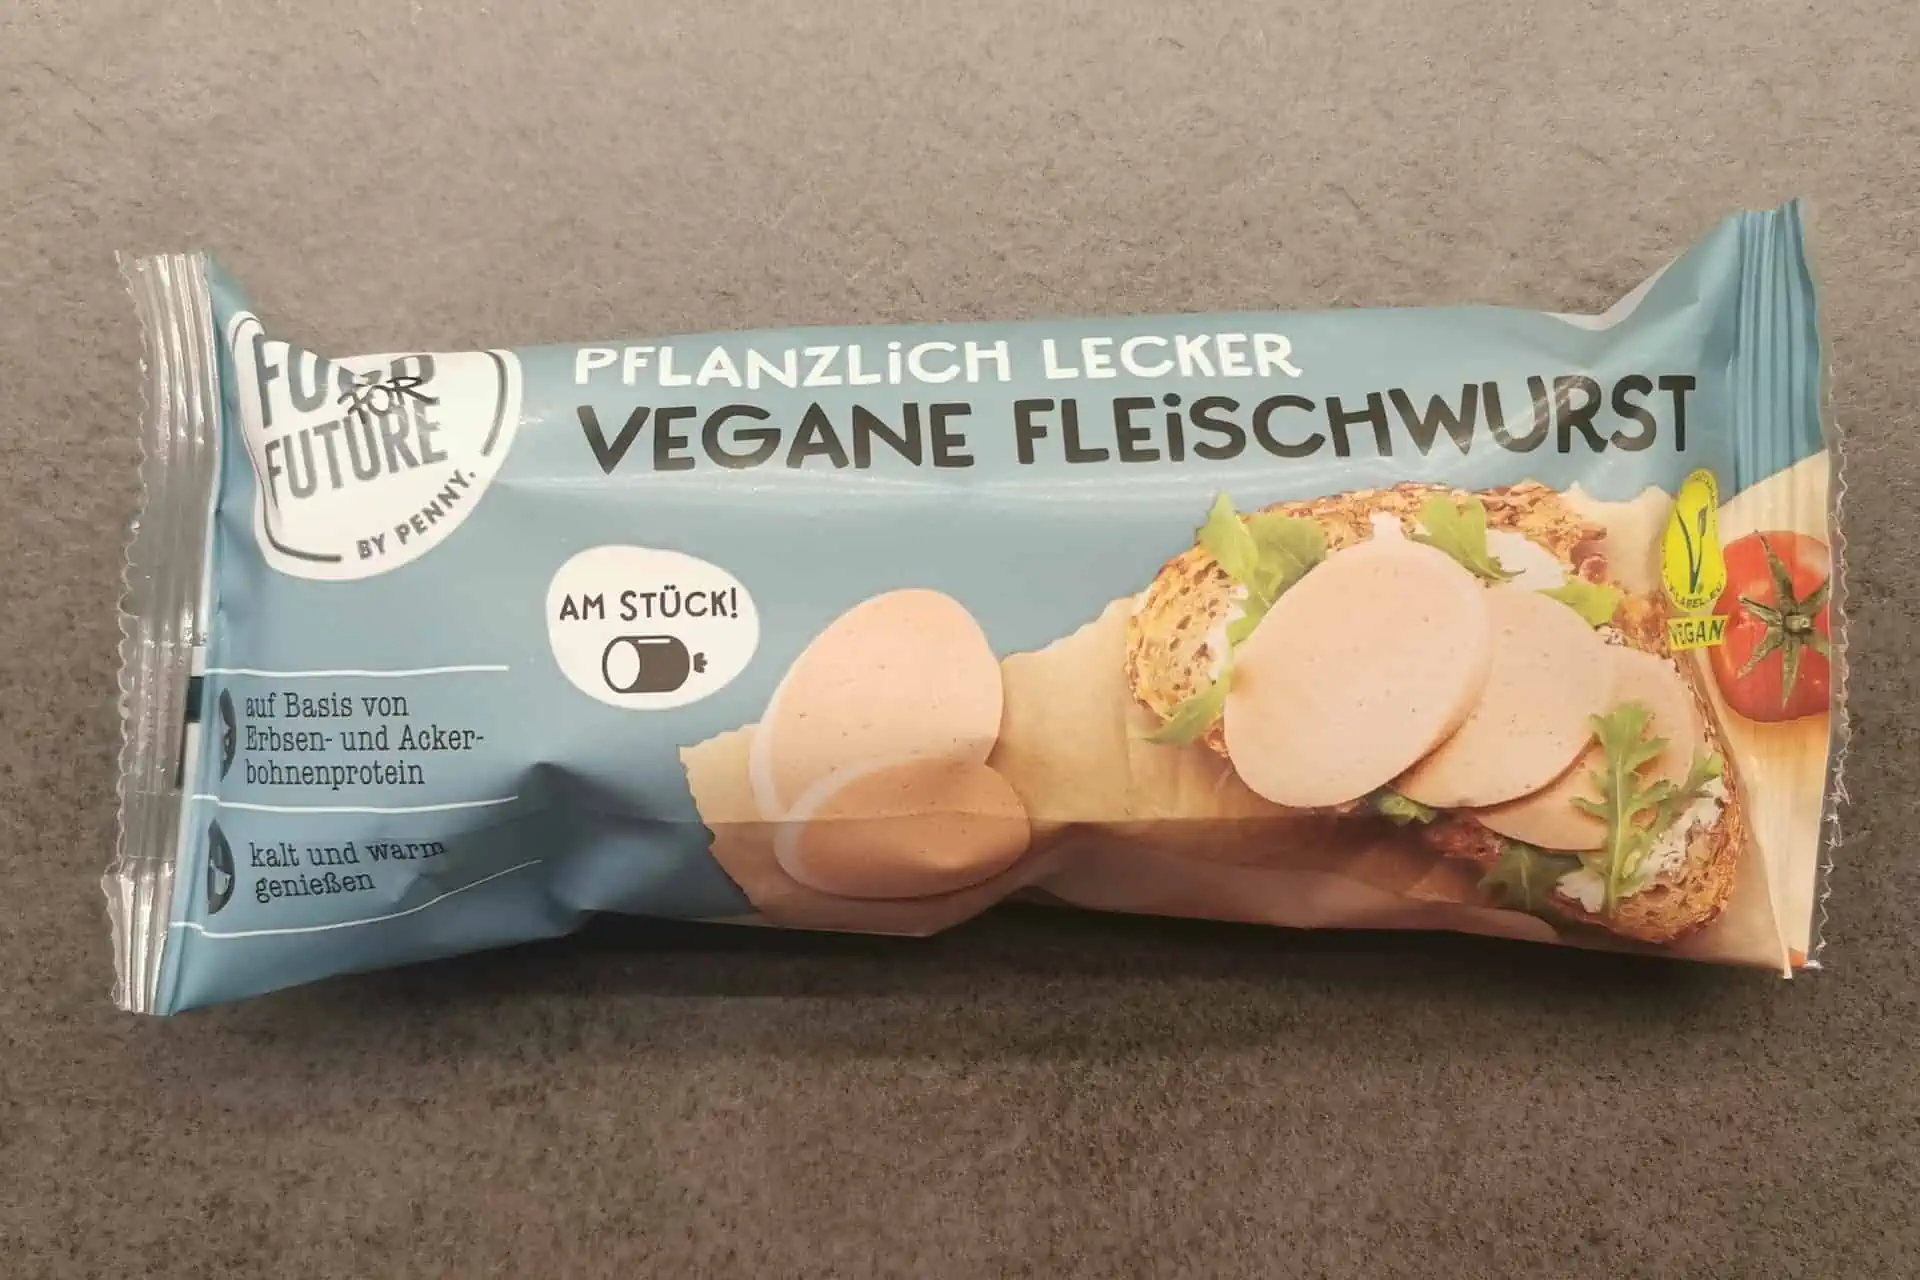 Food for Future: Vegane Fleischwurst